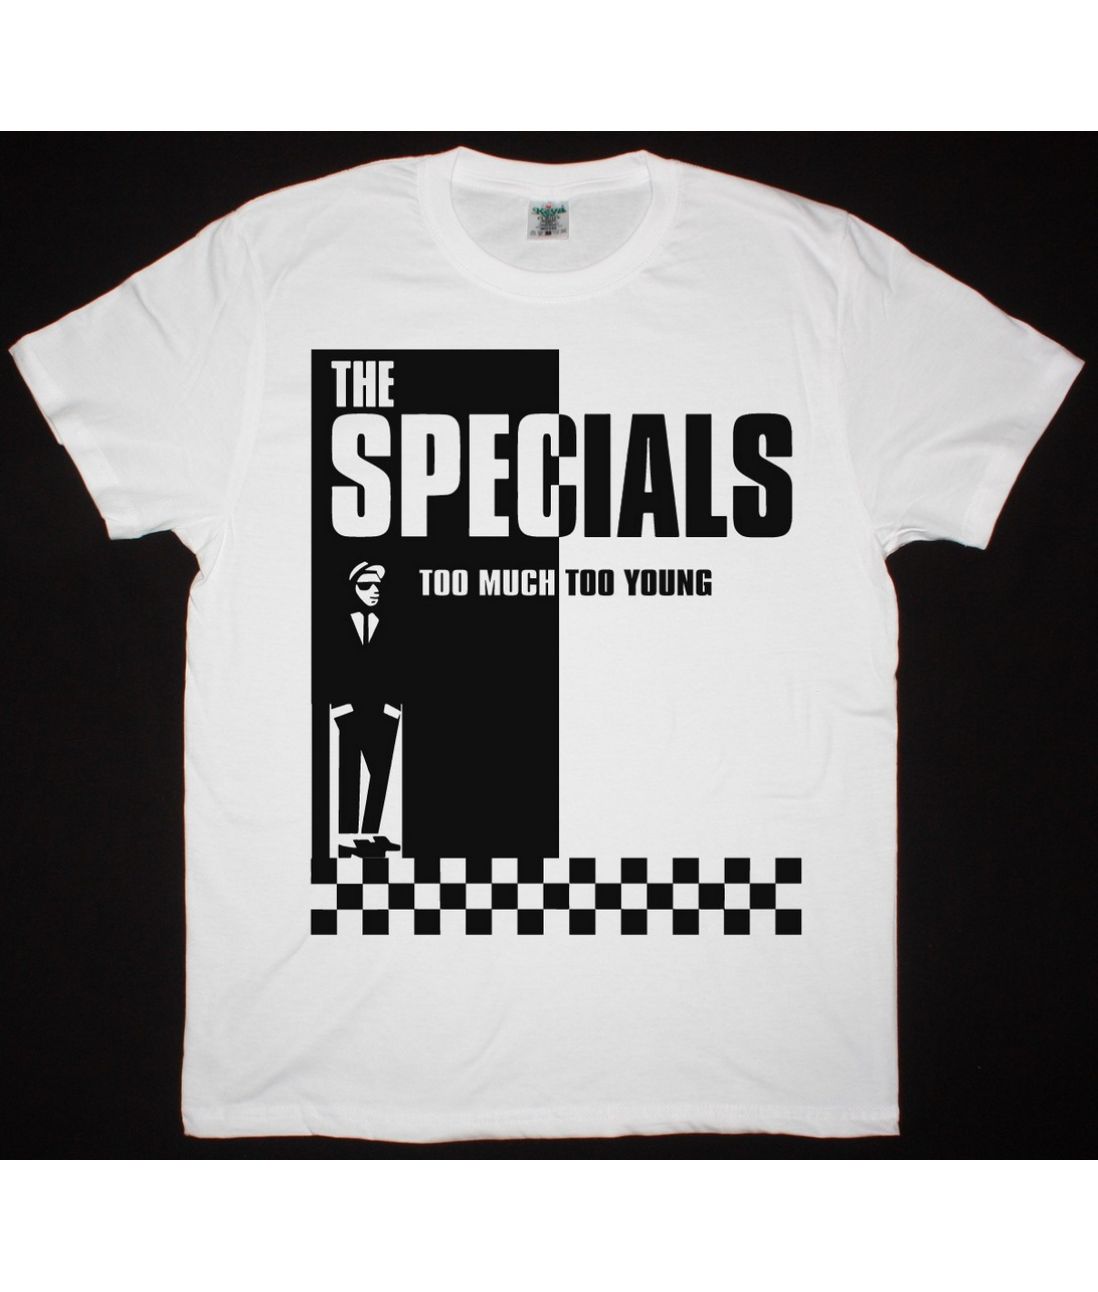 the specials shirt